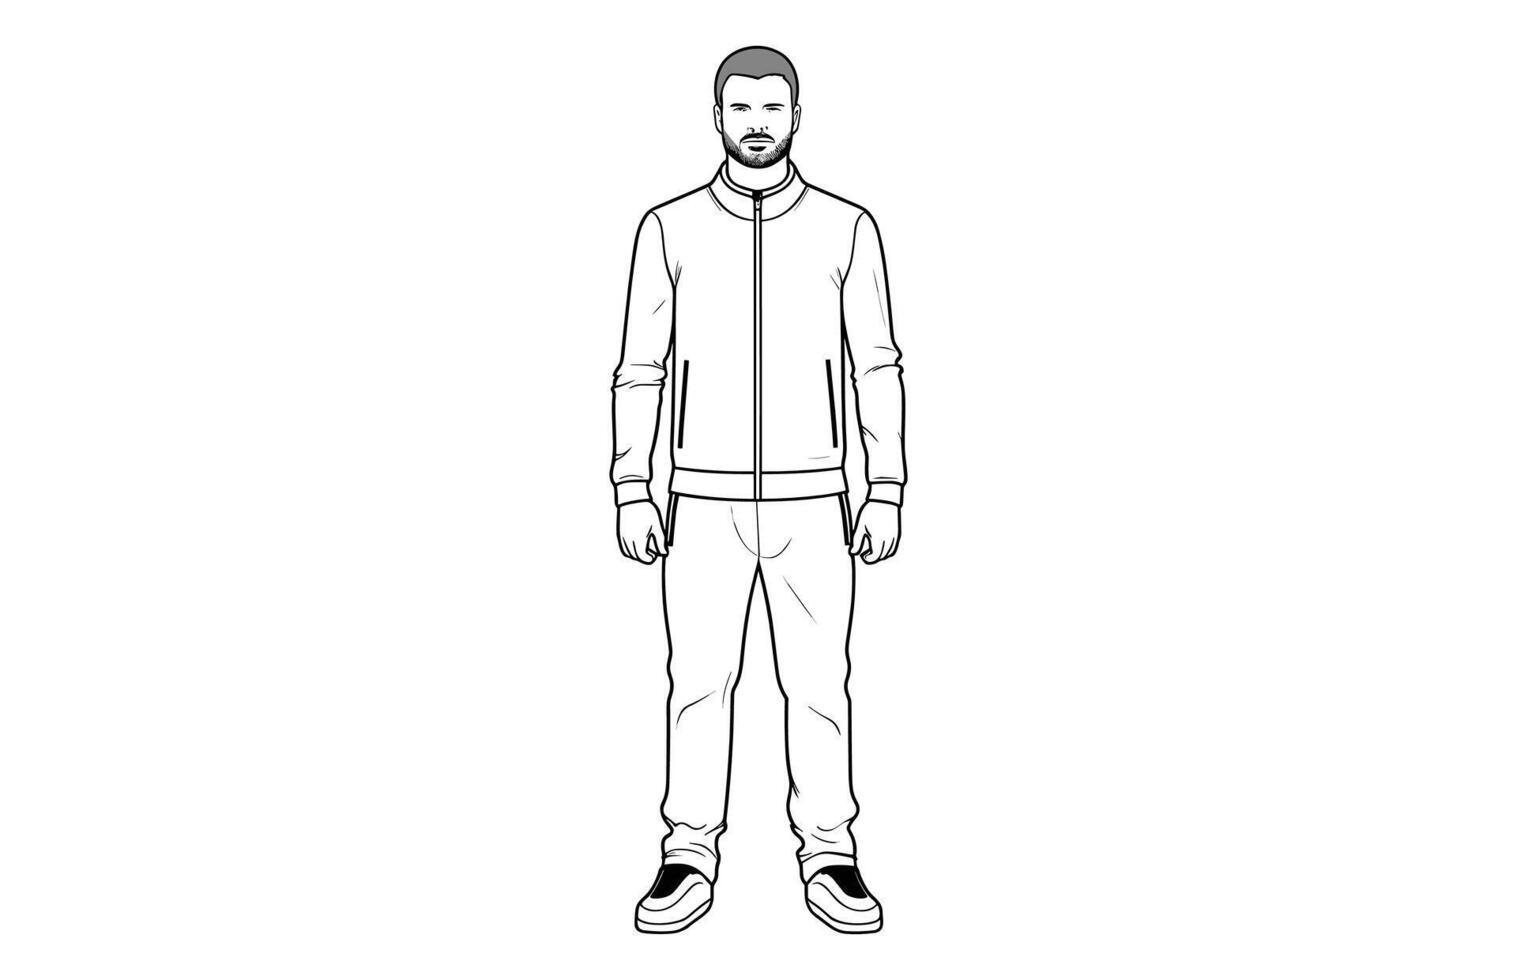 Men's Zip Up Track Jacket Outline Illustration, Long sleeve polo collar track suit jacket. vector